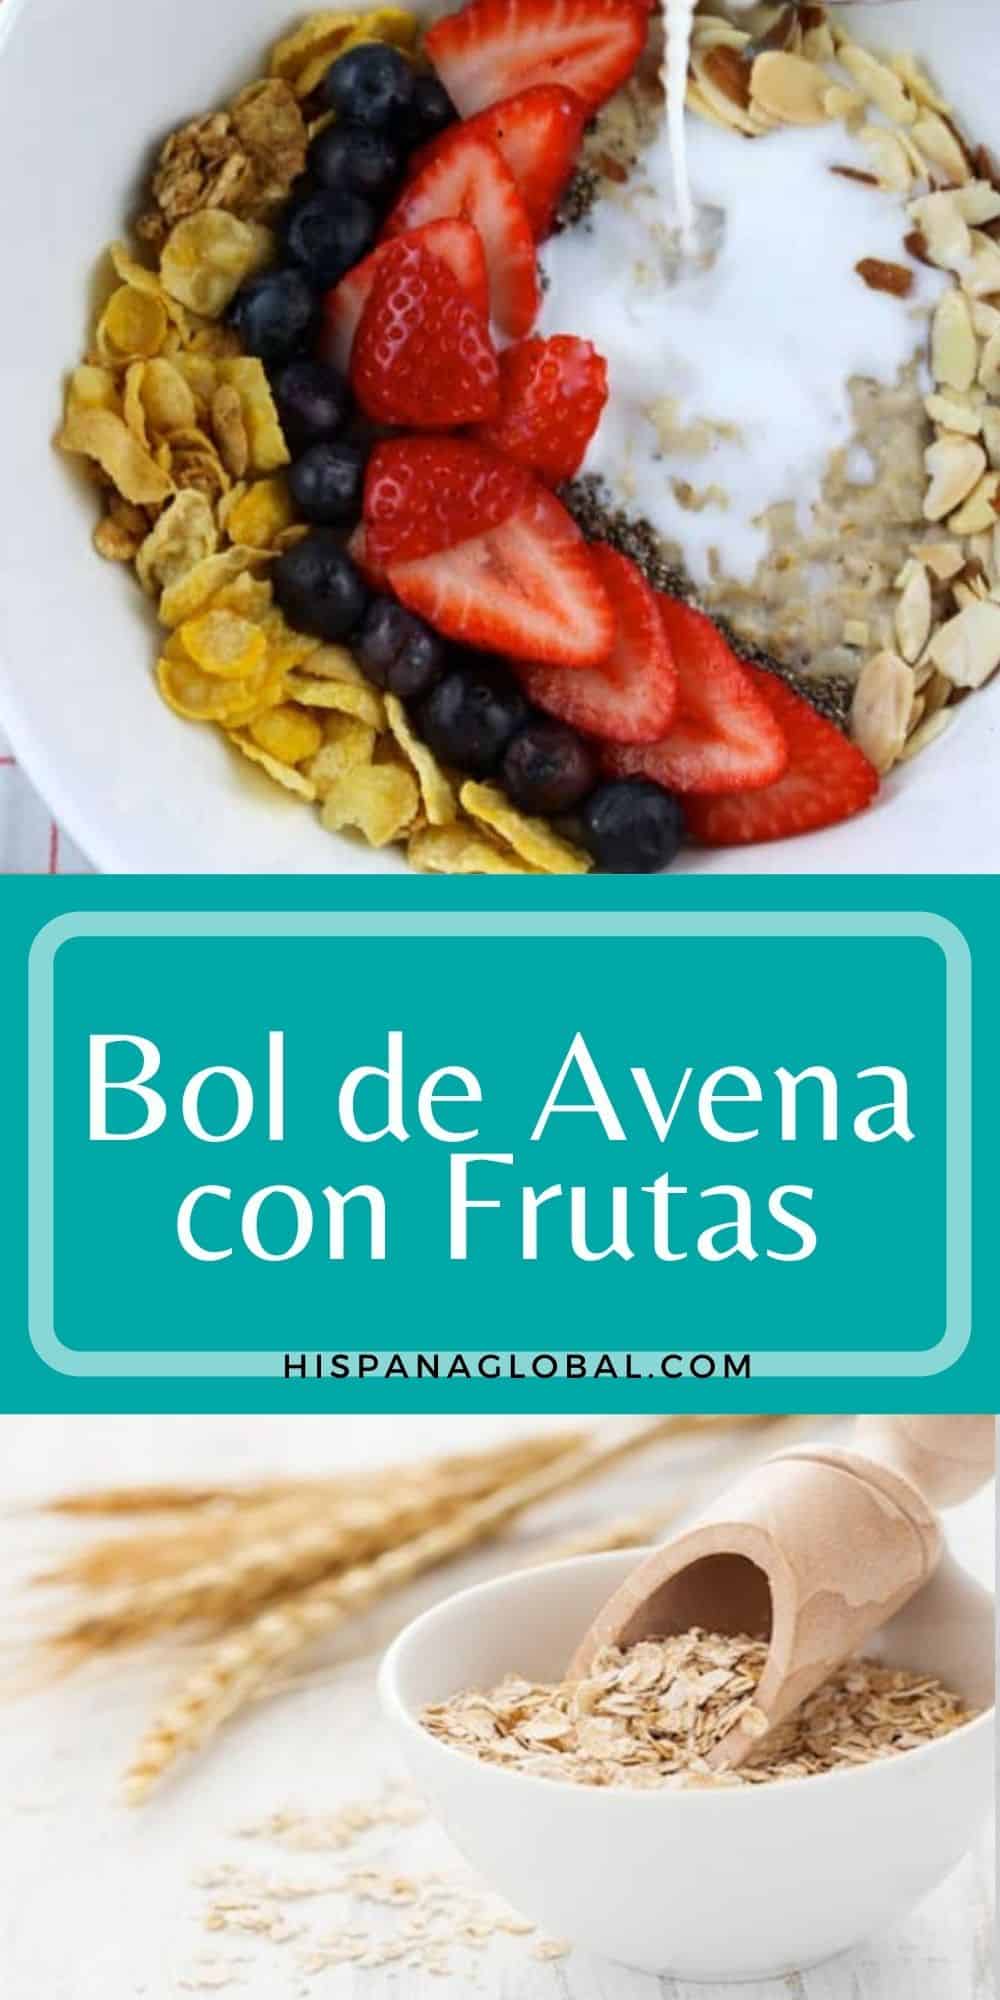 Nutritiva receta de bol de avena y fruta - Hispana Global